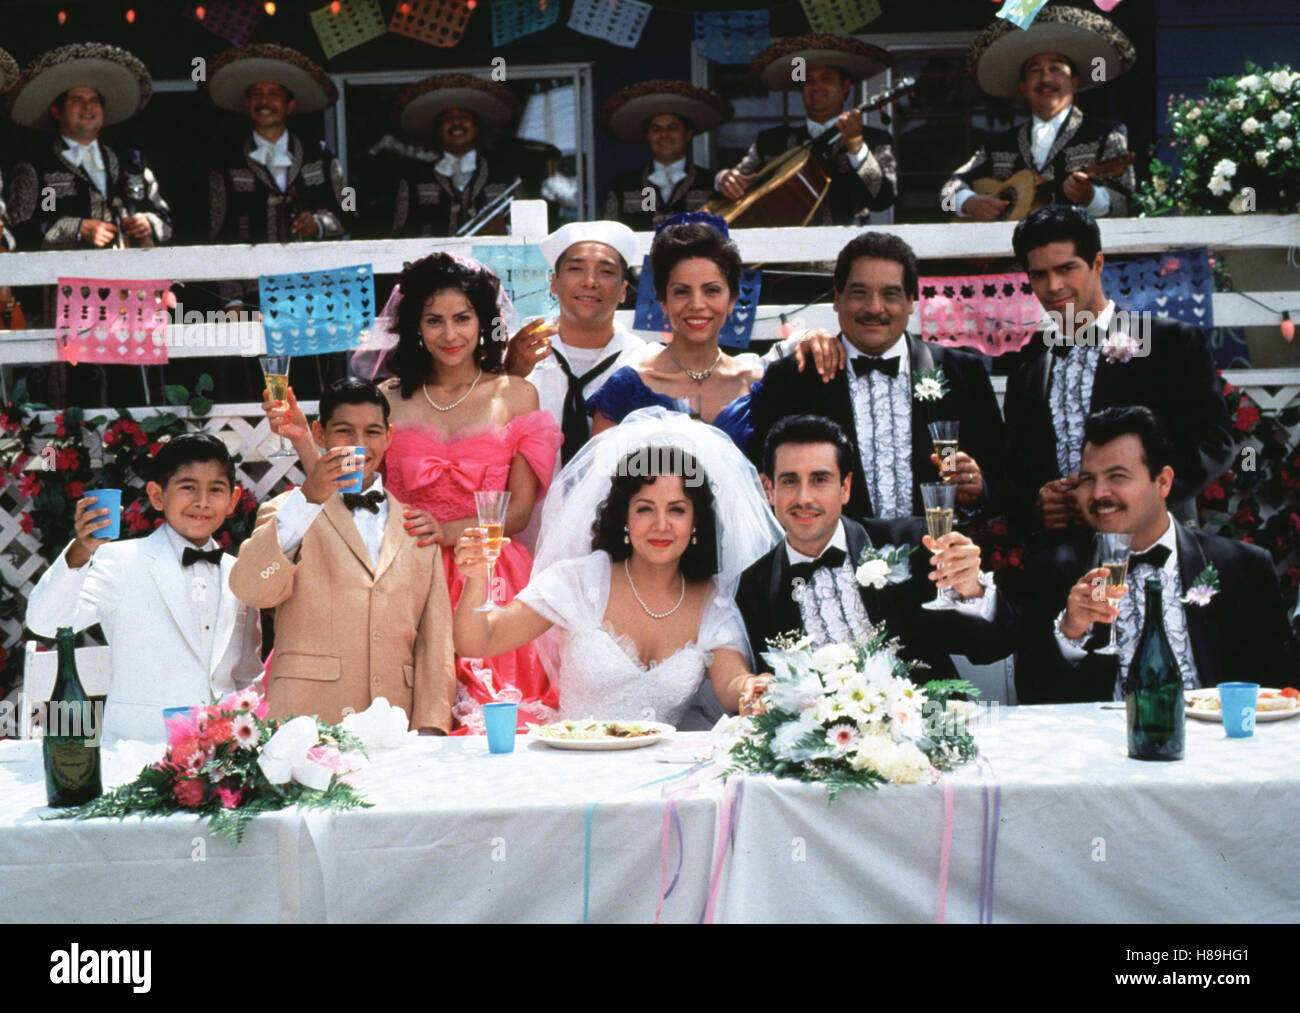 Meine verrückte Familie, (MY FAMILY) USA 1995, Regie: Gregory Nava, JONATHAN HERNANDEZ, GREG ALBERT, CONSTANCE MARIE, BENITO MARTINEZ, MARIA CANALS, JENNY GAGO, CHRIS FRANCO, EDUARDO LOPEZ ROJAS, ESAI MORALES, Stichwort: Hochzeit, Feier, Familie Stock Photo